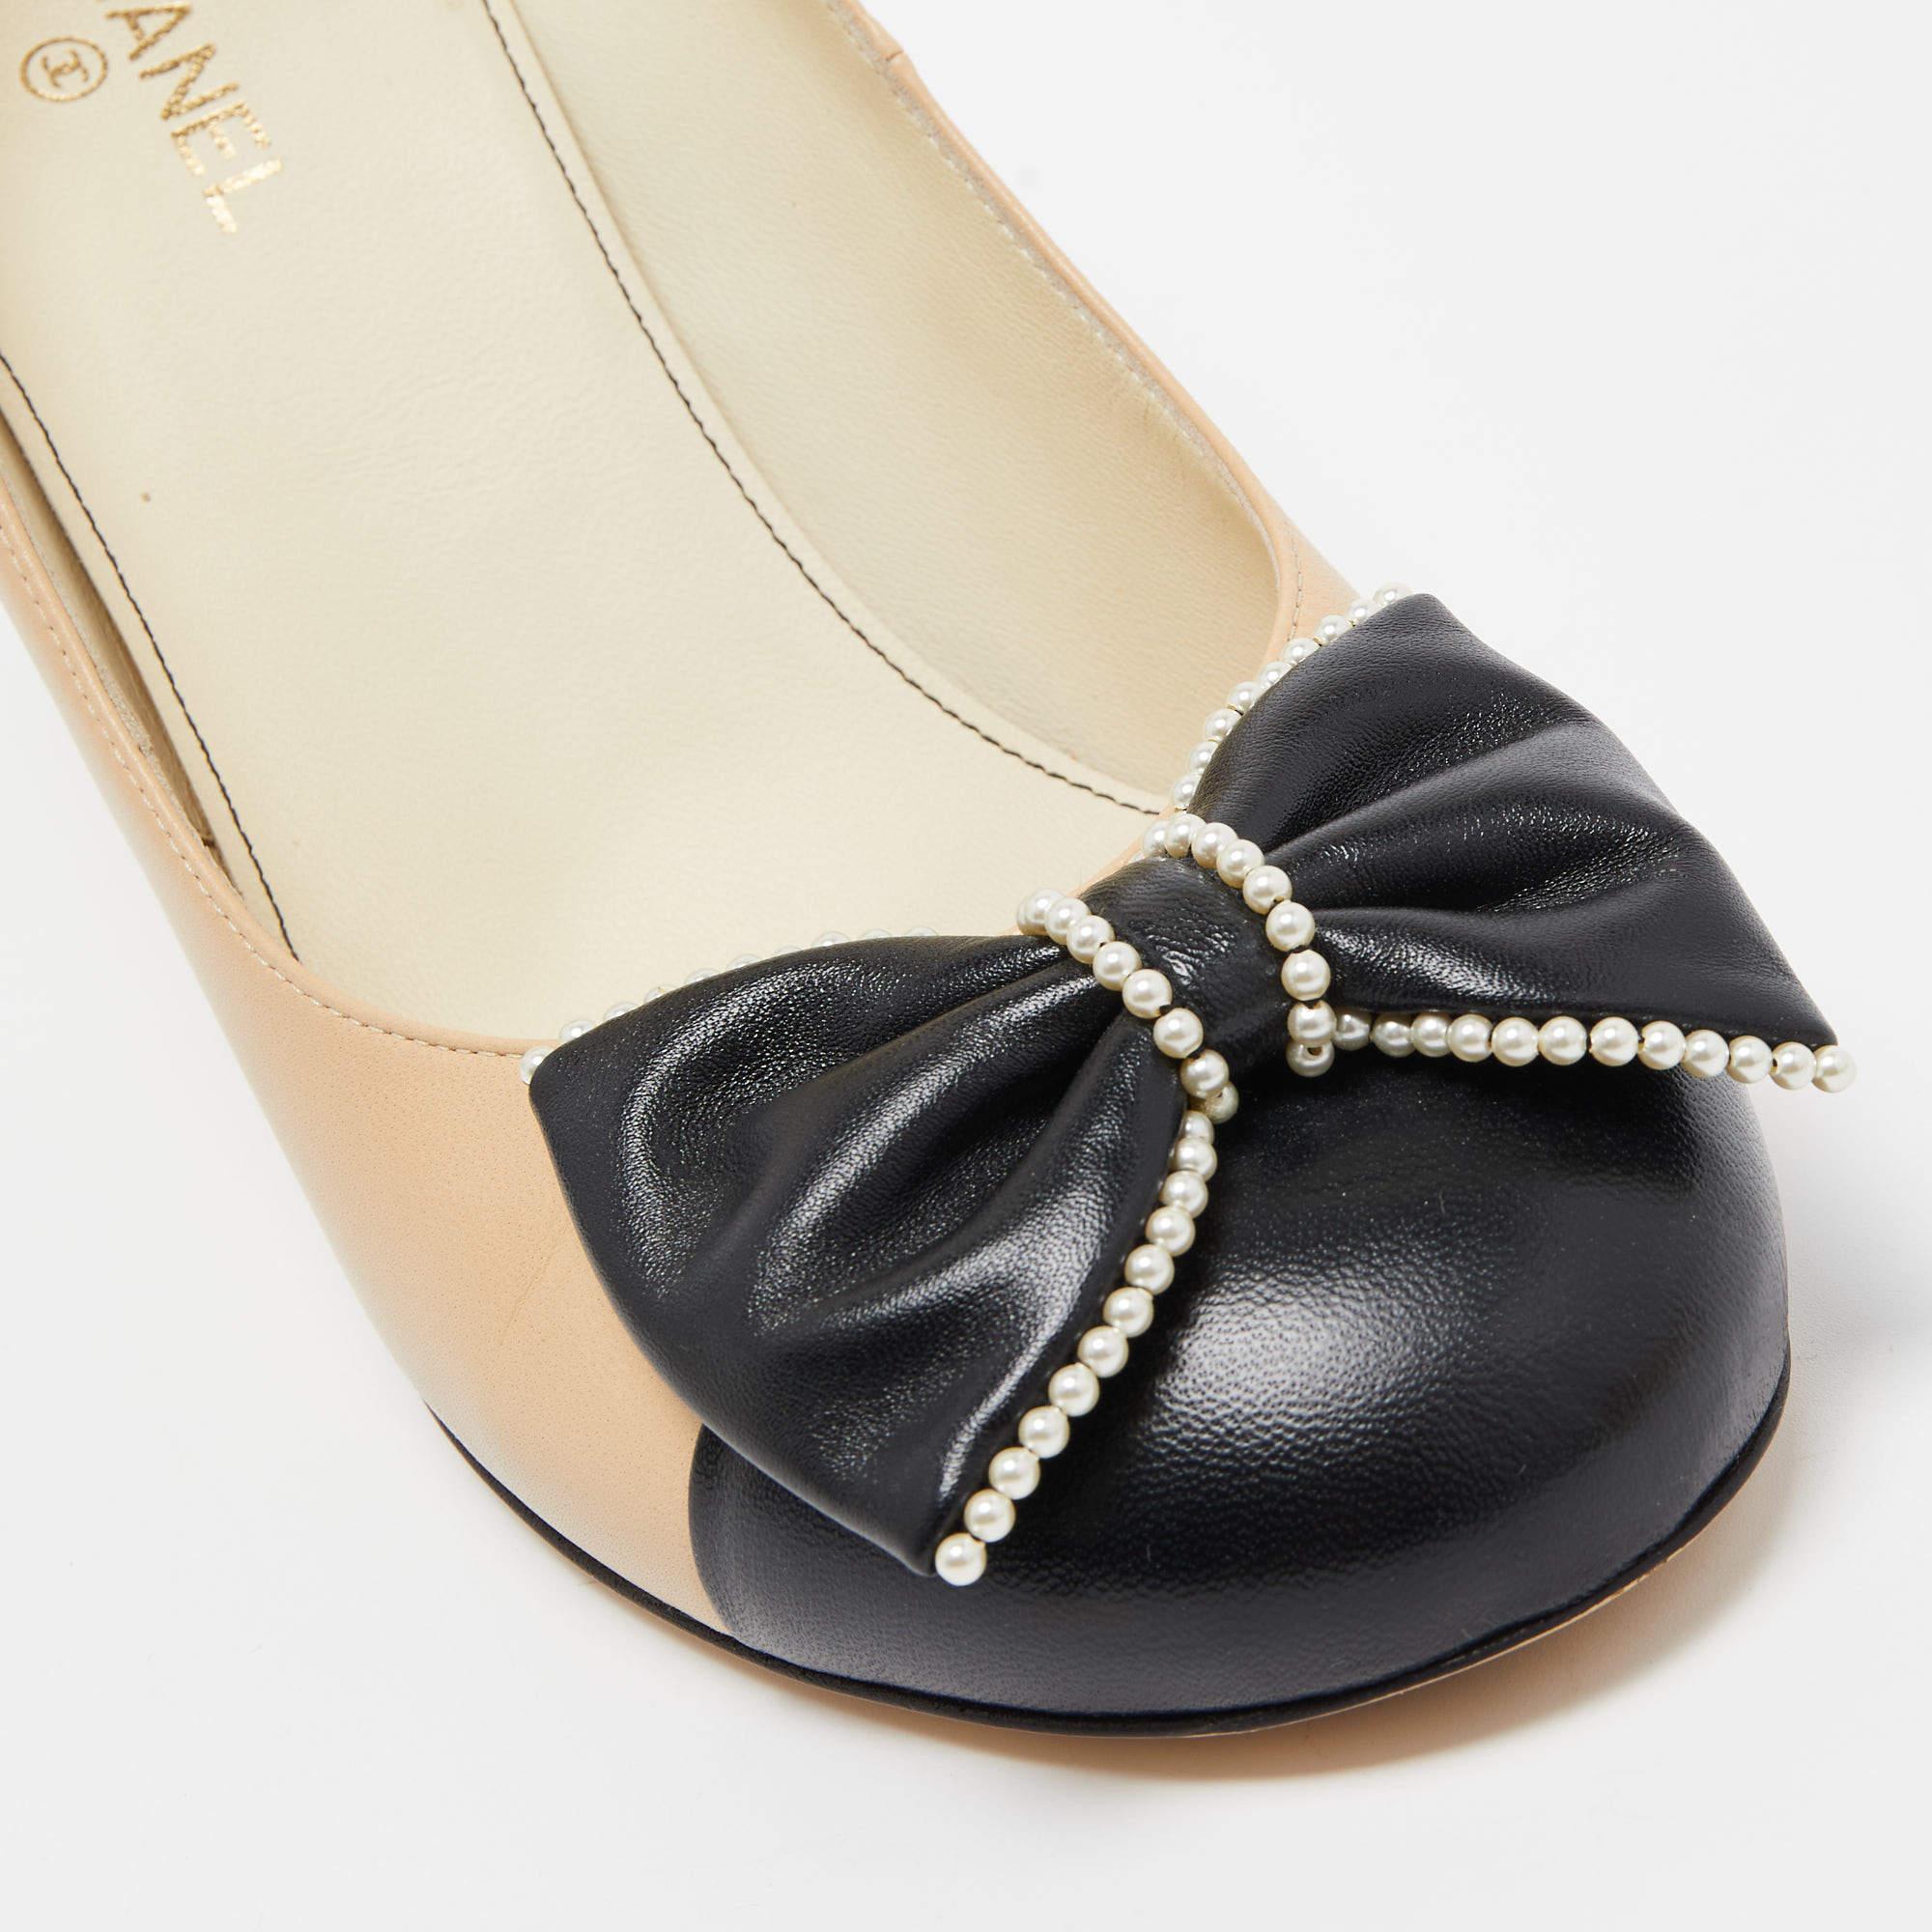 Women's Chanel Black/Beige Leather Pearl Embellished Bow Cap Toe Pumps Size 39